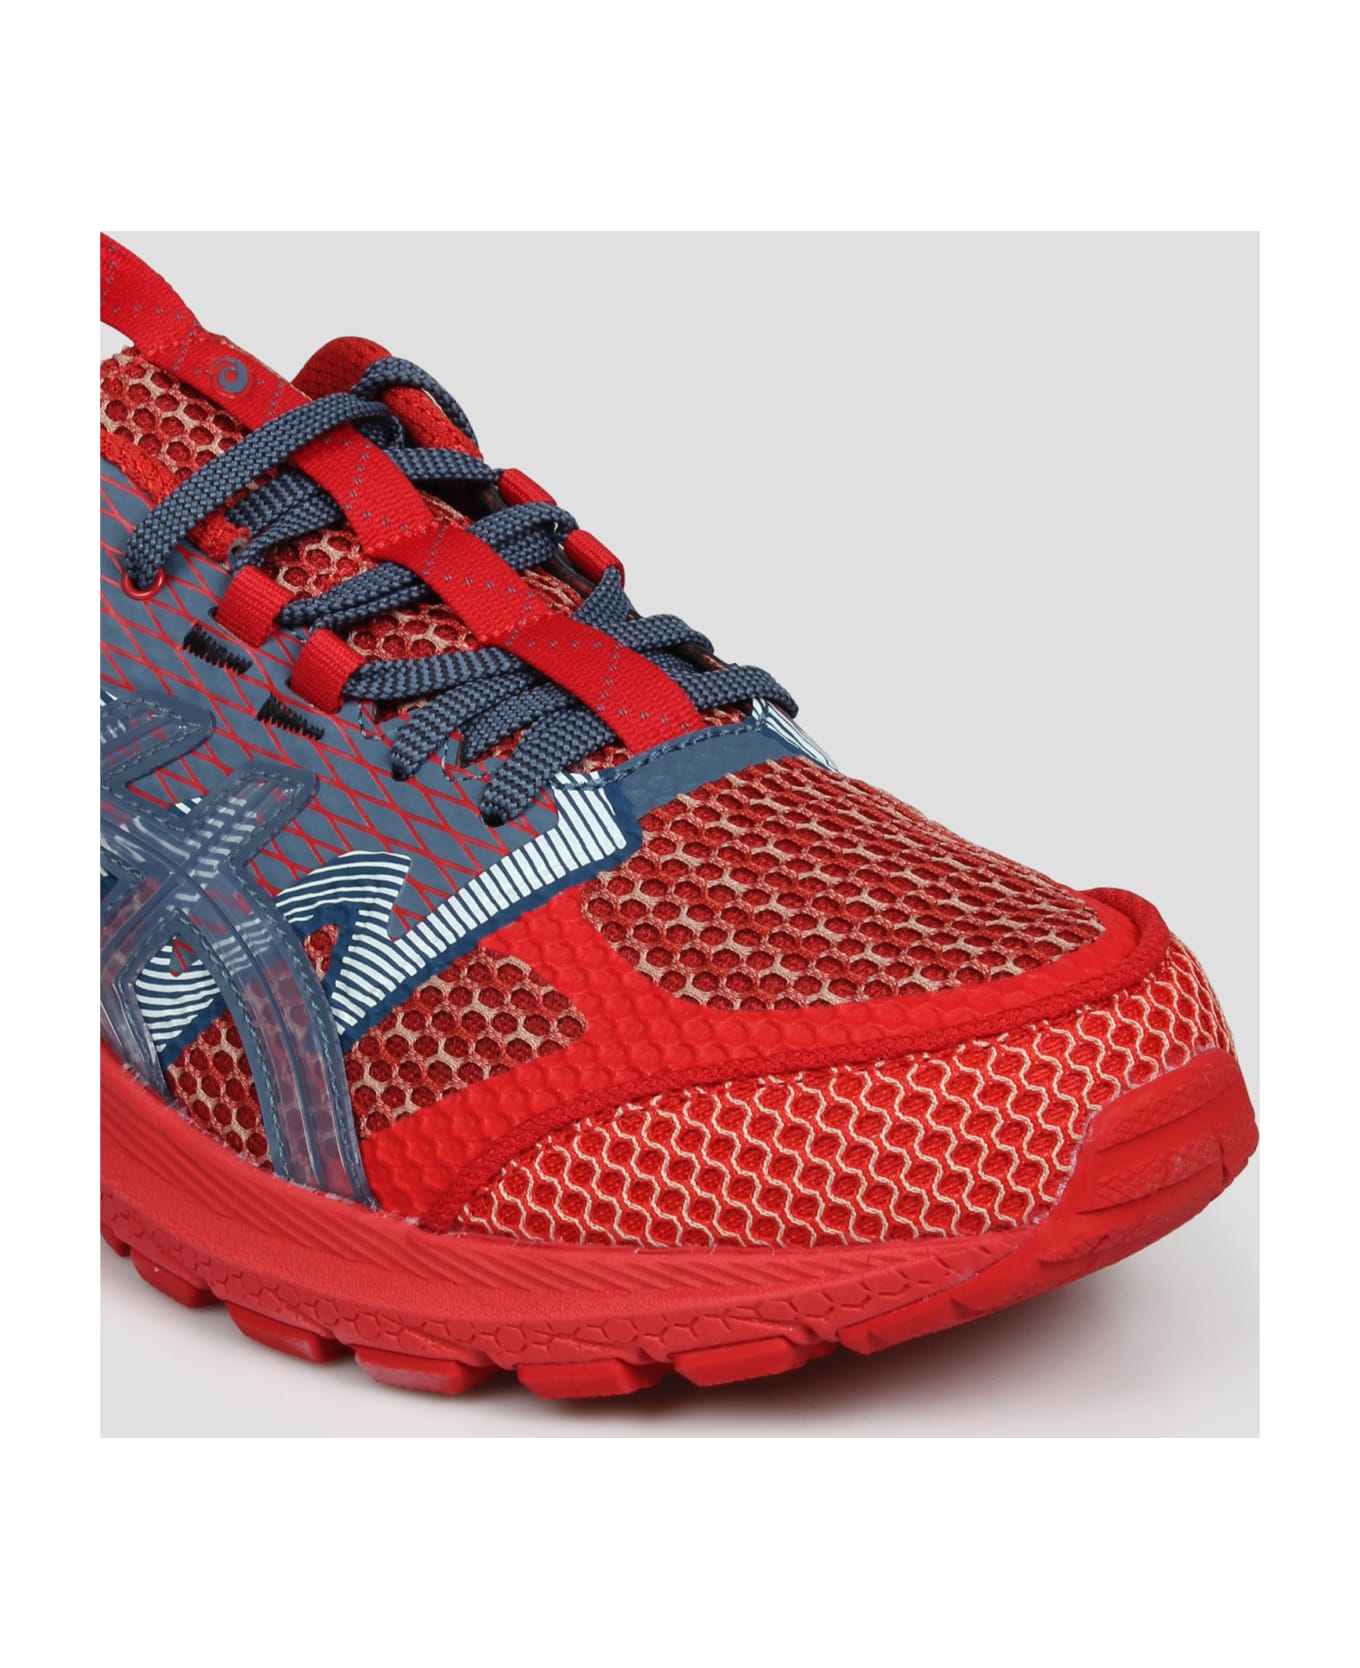 Asics Us4-s Gel-terrain Sneakers - Red